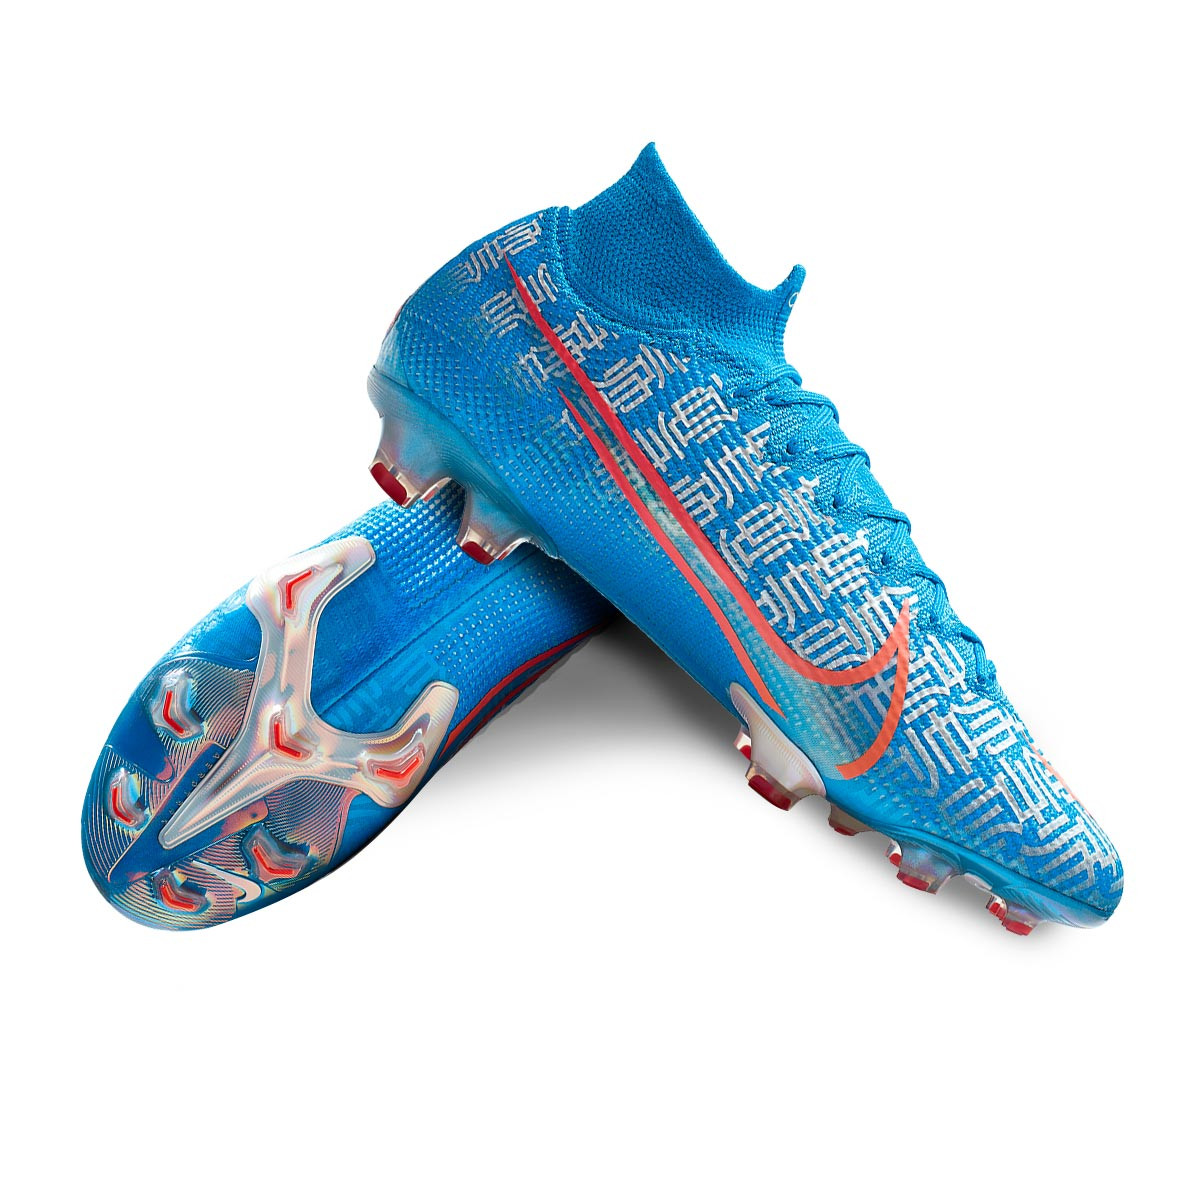 Bota de fútbol Nike Superfly VII Elite CR7 Shuai FG Blue hero-Solar red -  Tienda de fútbol Fútbol Emotion